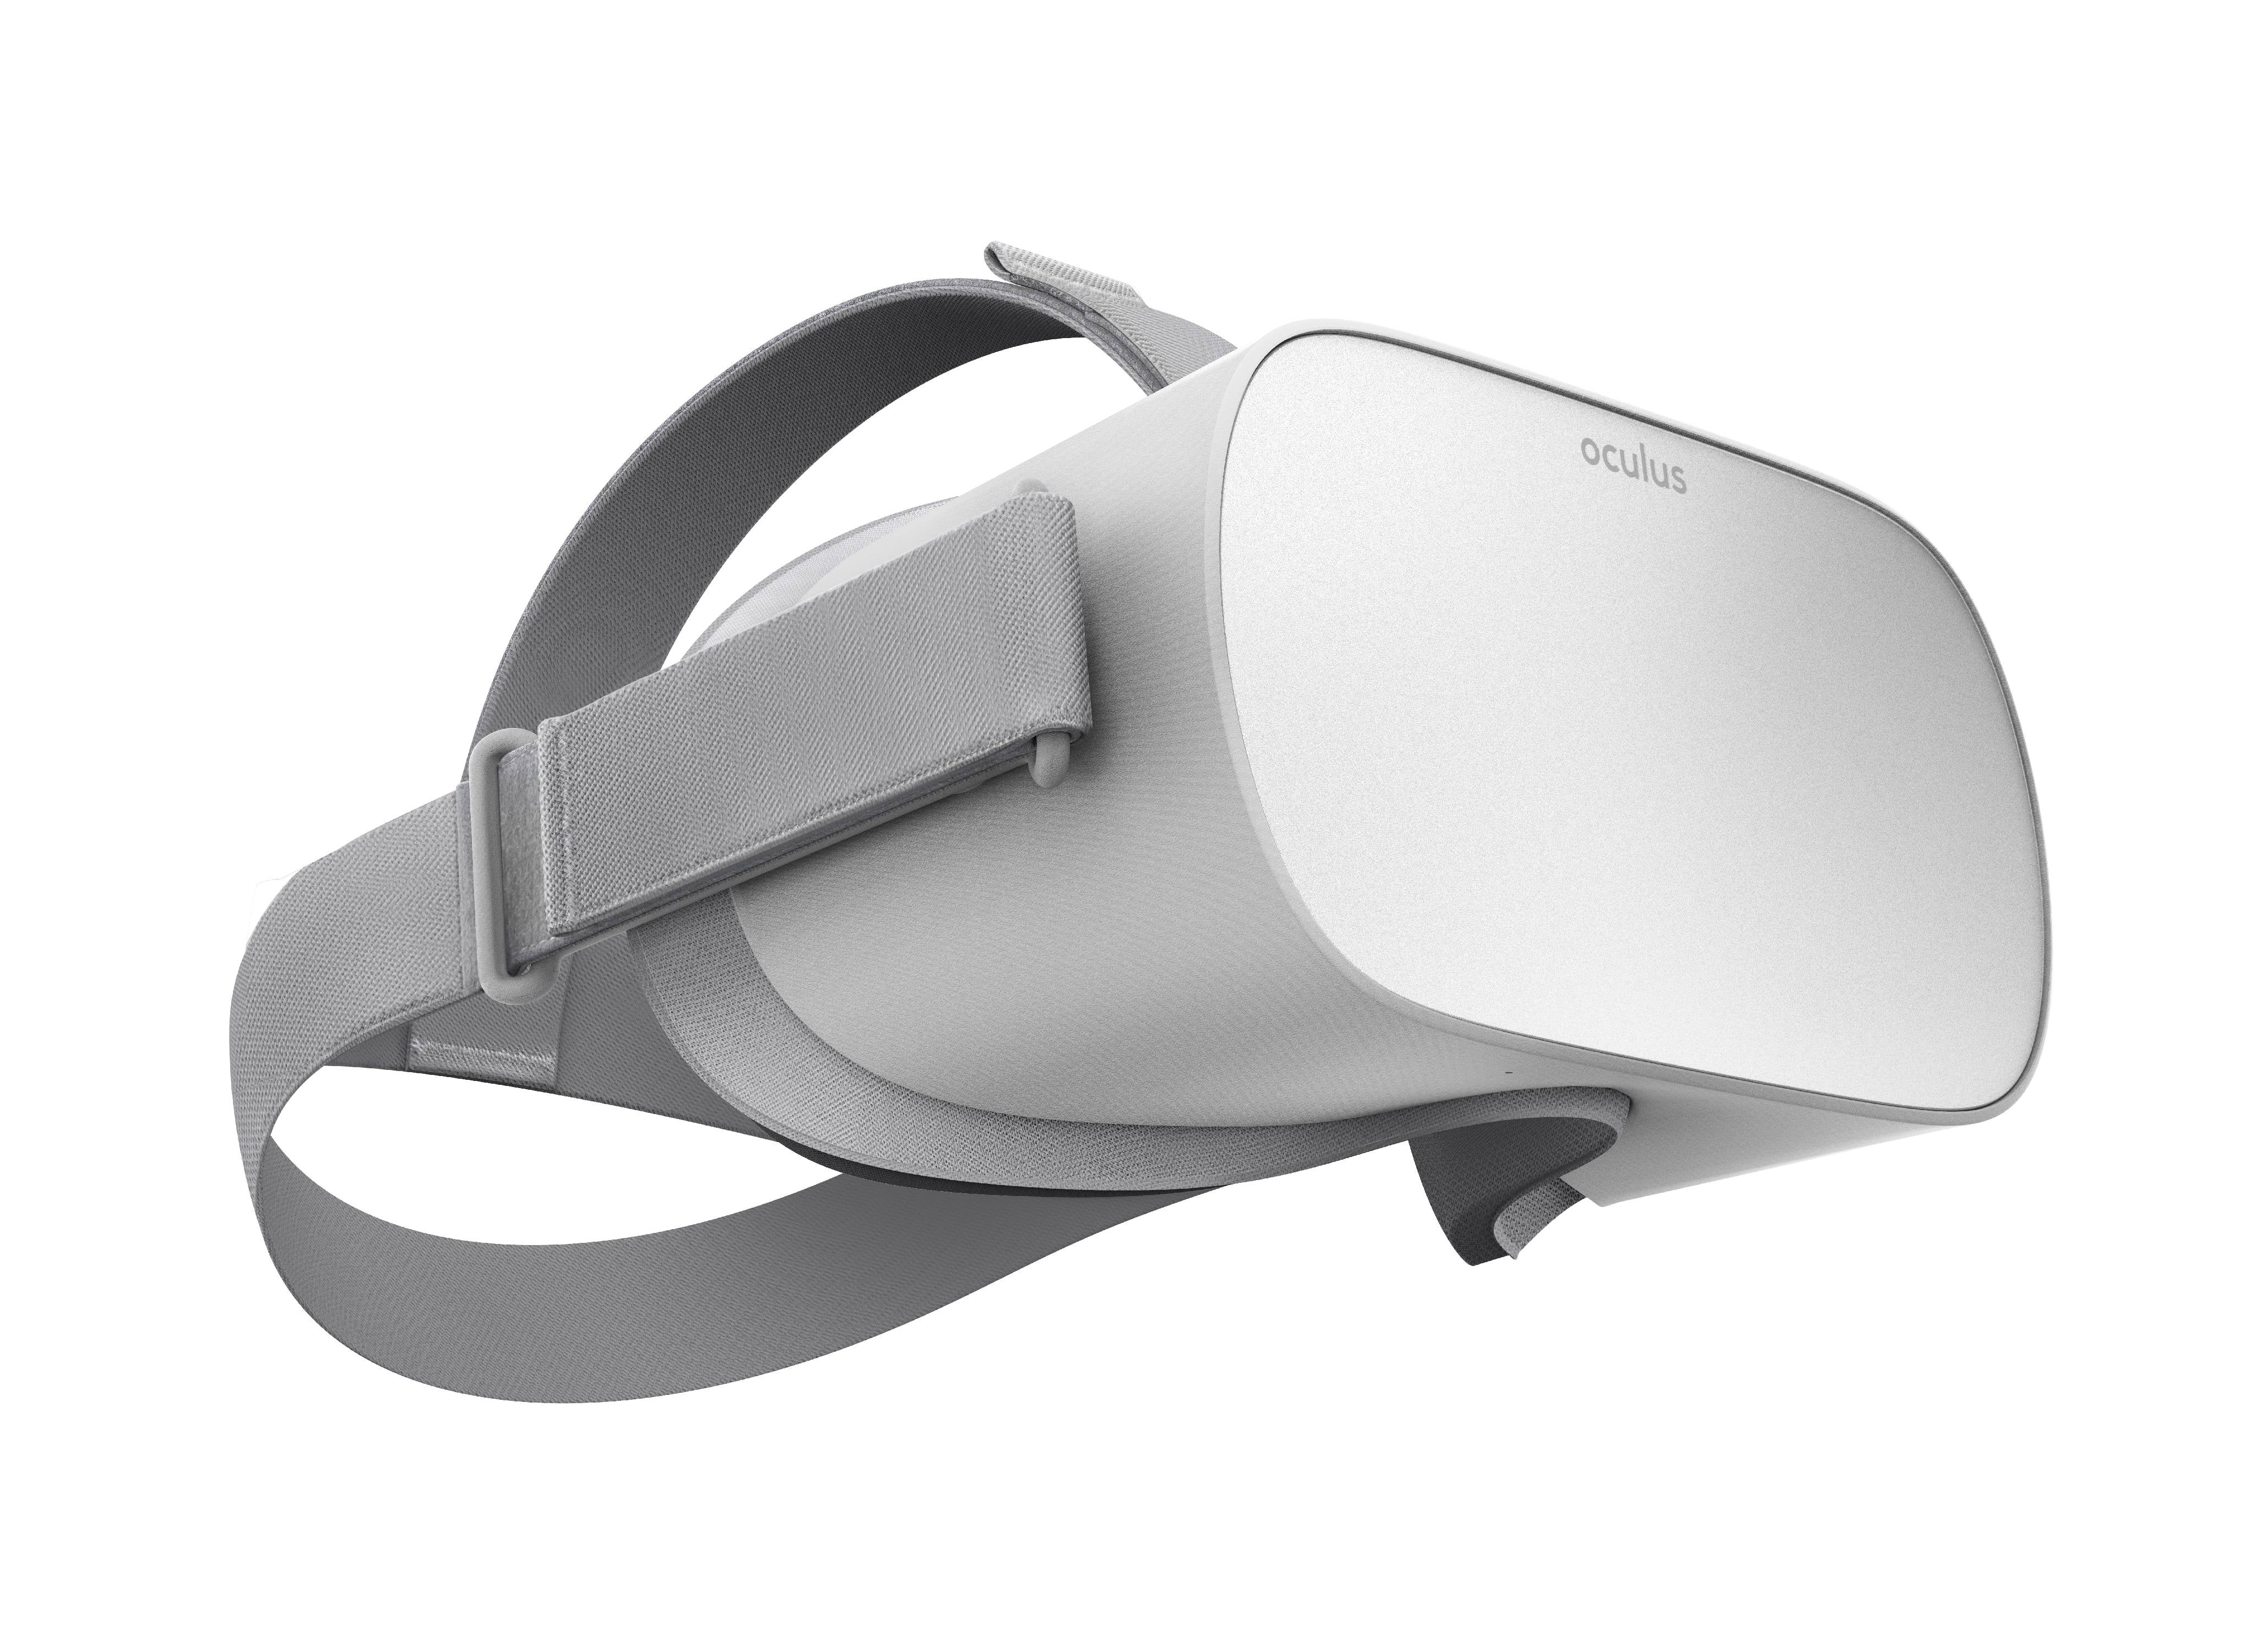 Oculus Go Standalone Virtual Reality Headset - 32GB Oculus VR